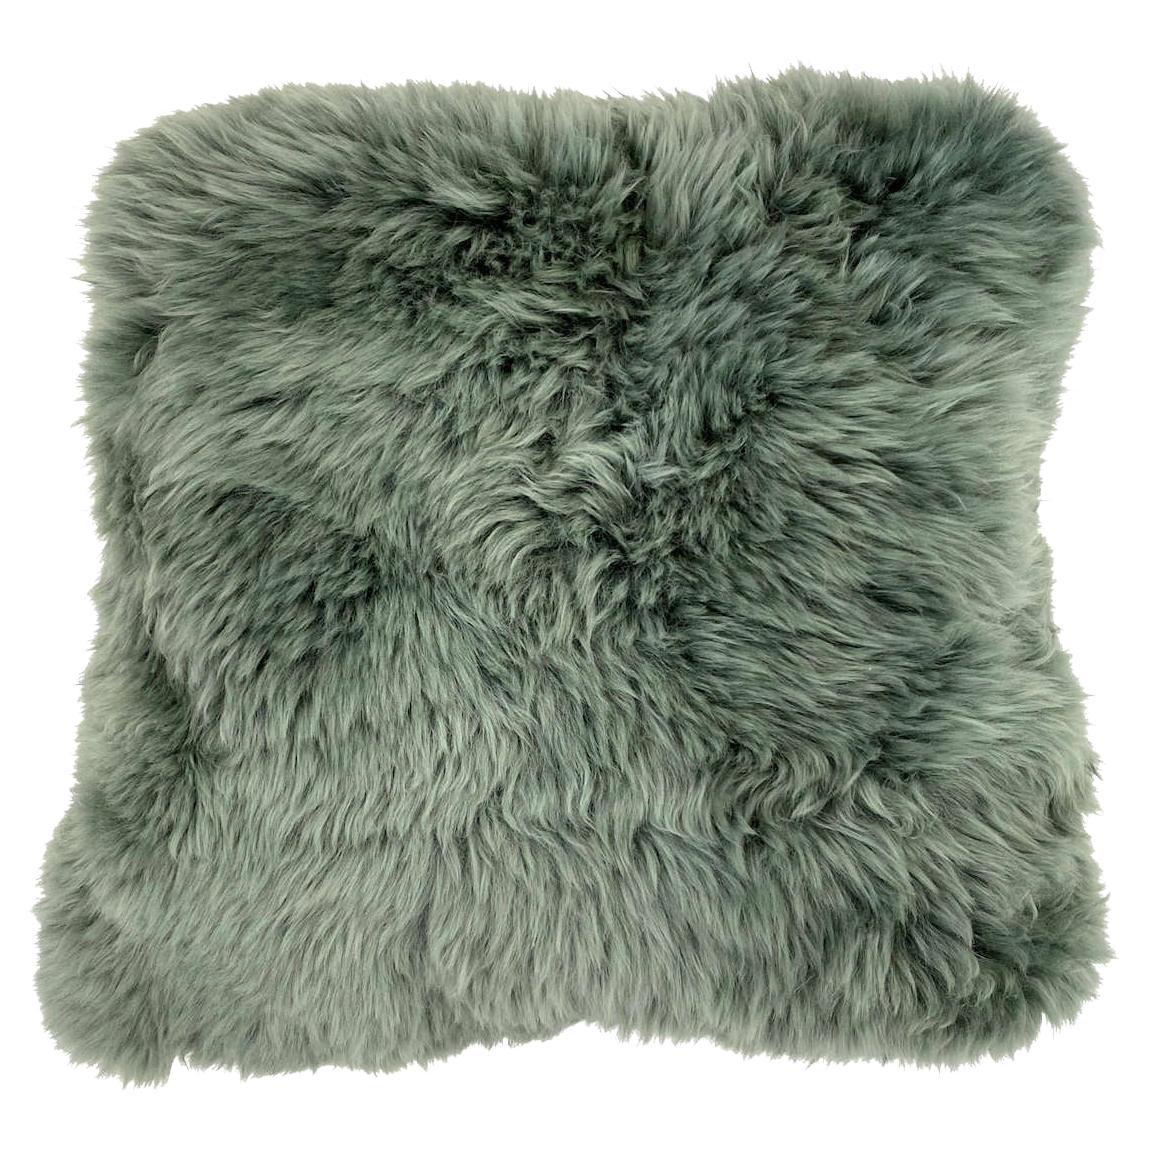 Green Fluffy Pillow Sheepskin -  Eucalyptus 18x18"  For Sale